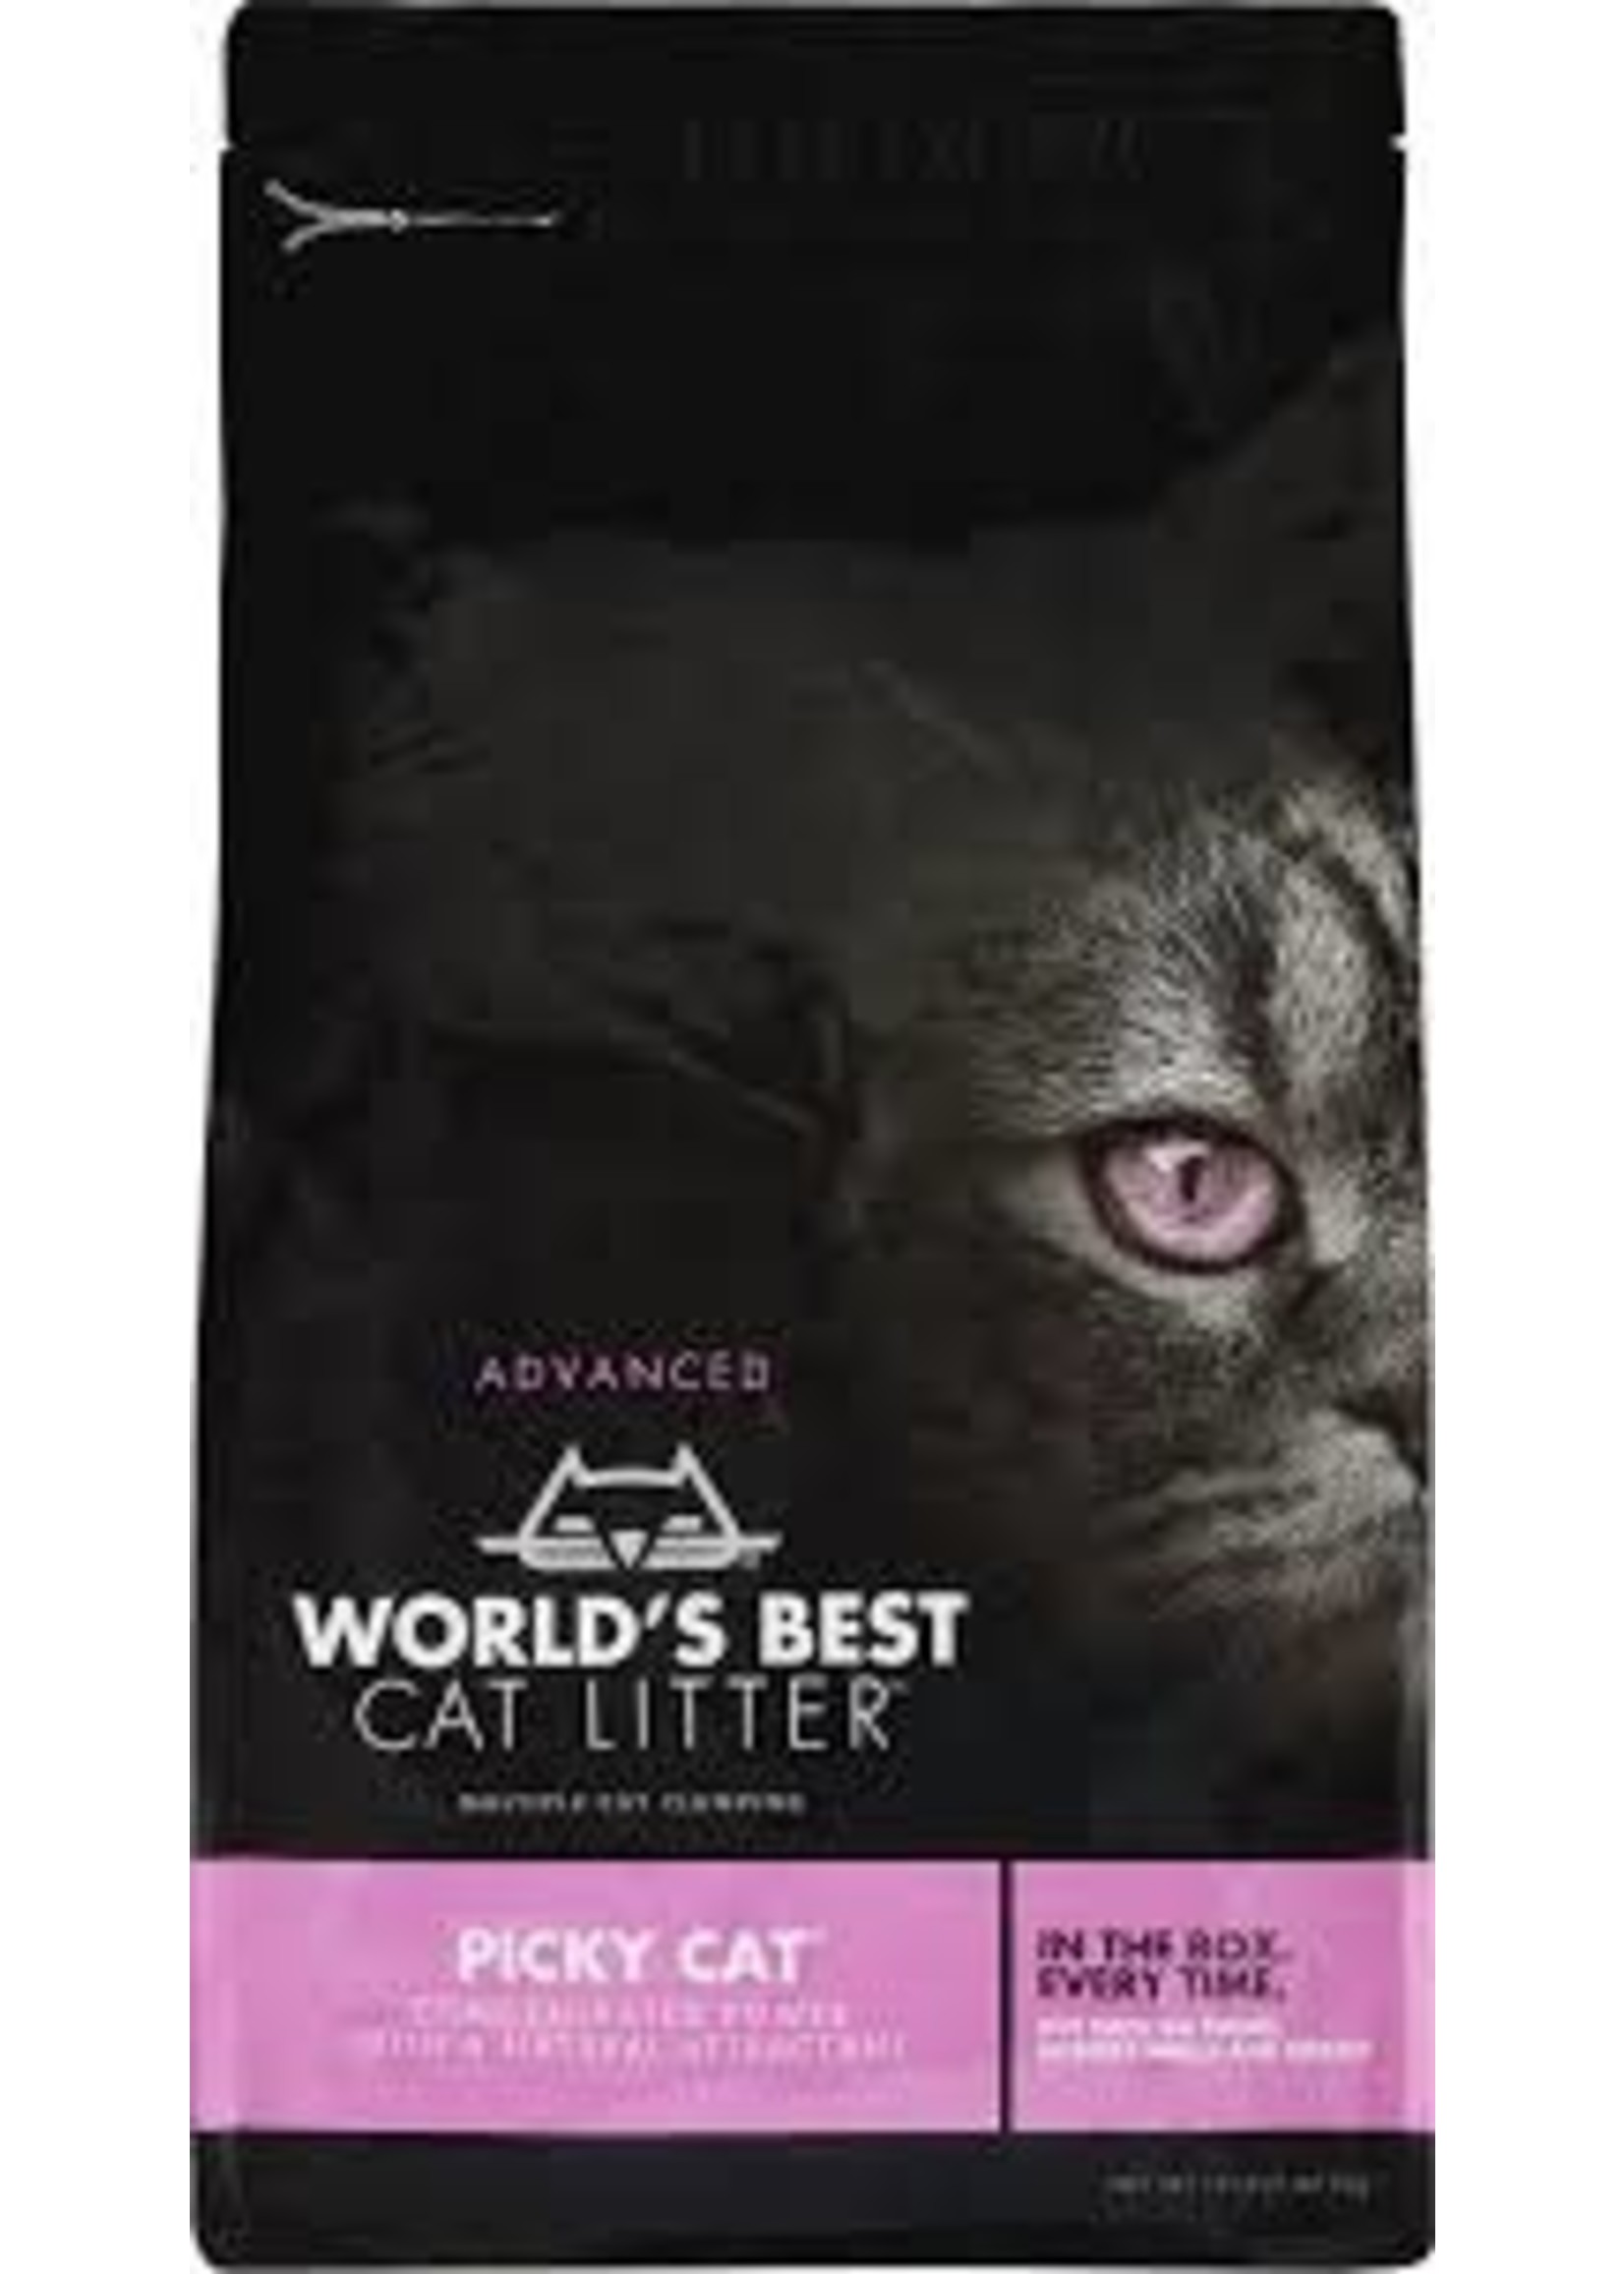 worlds best Worlds Best Cat Litter - Picky Cat